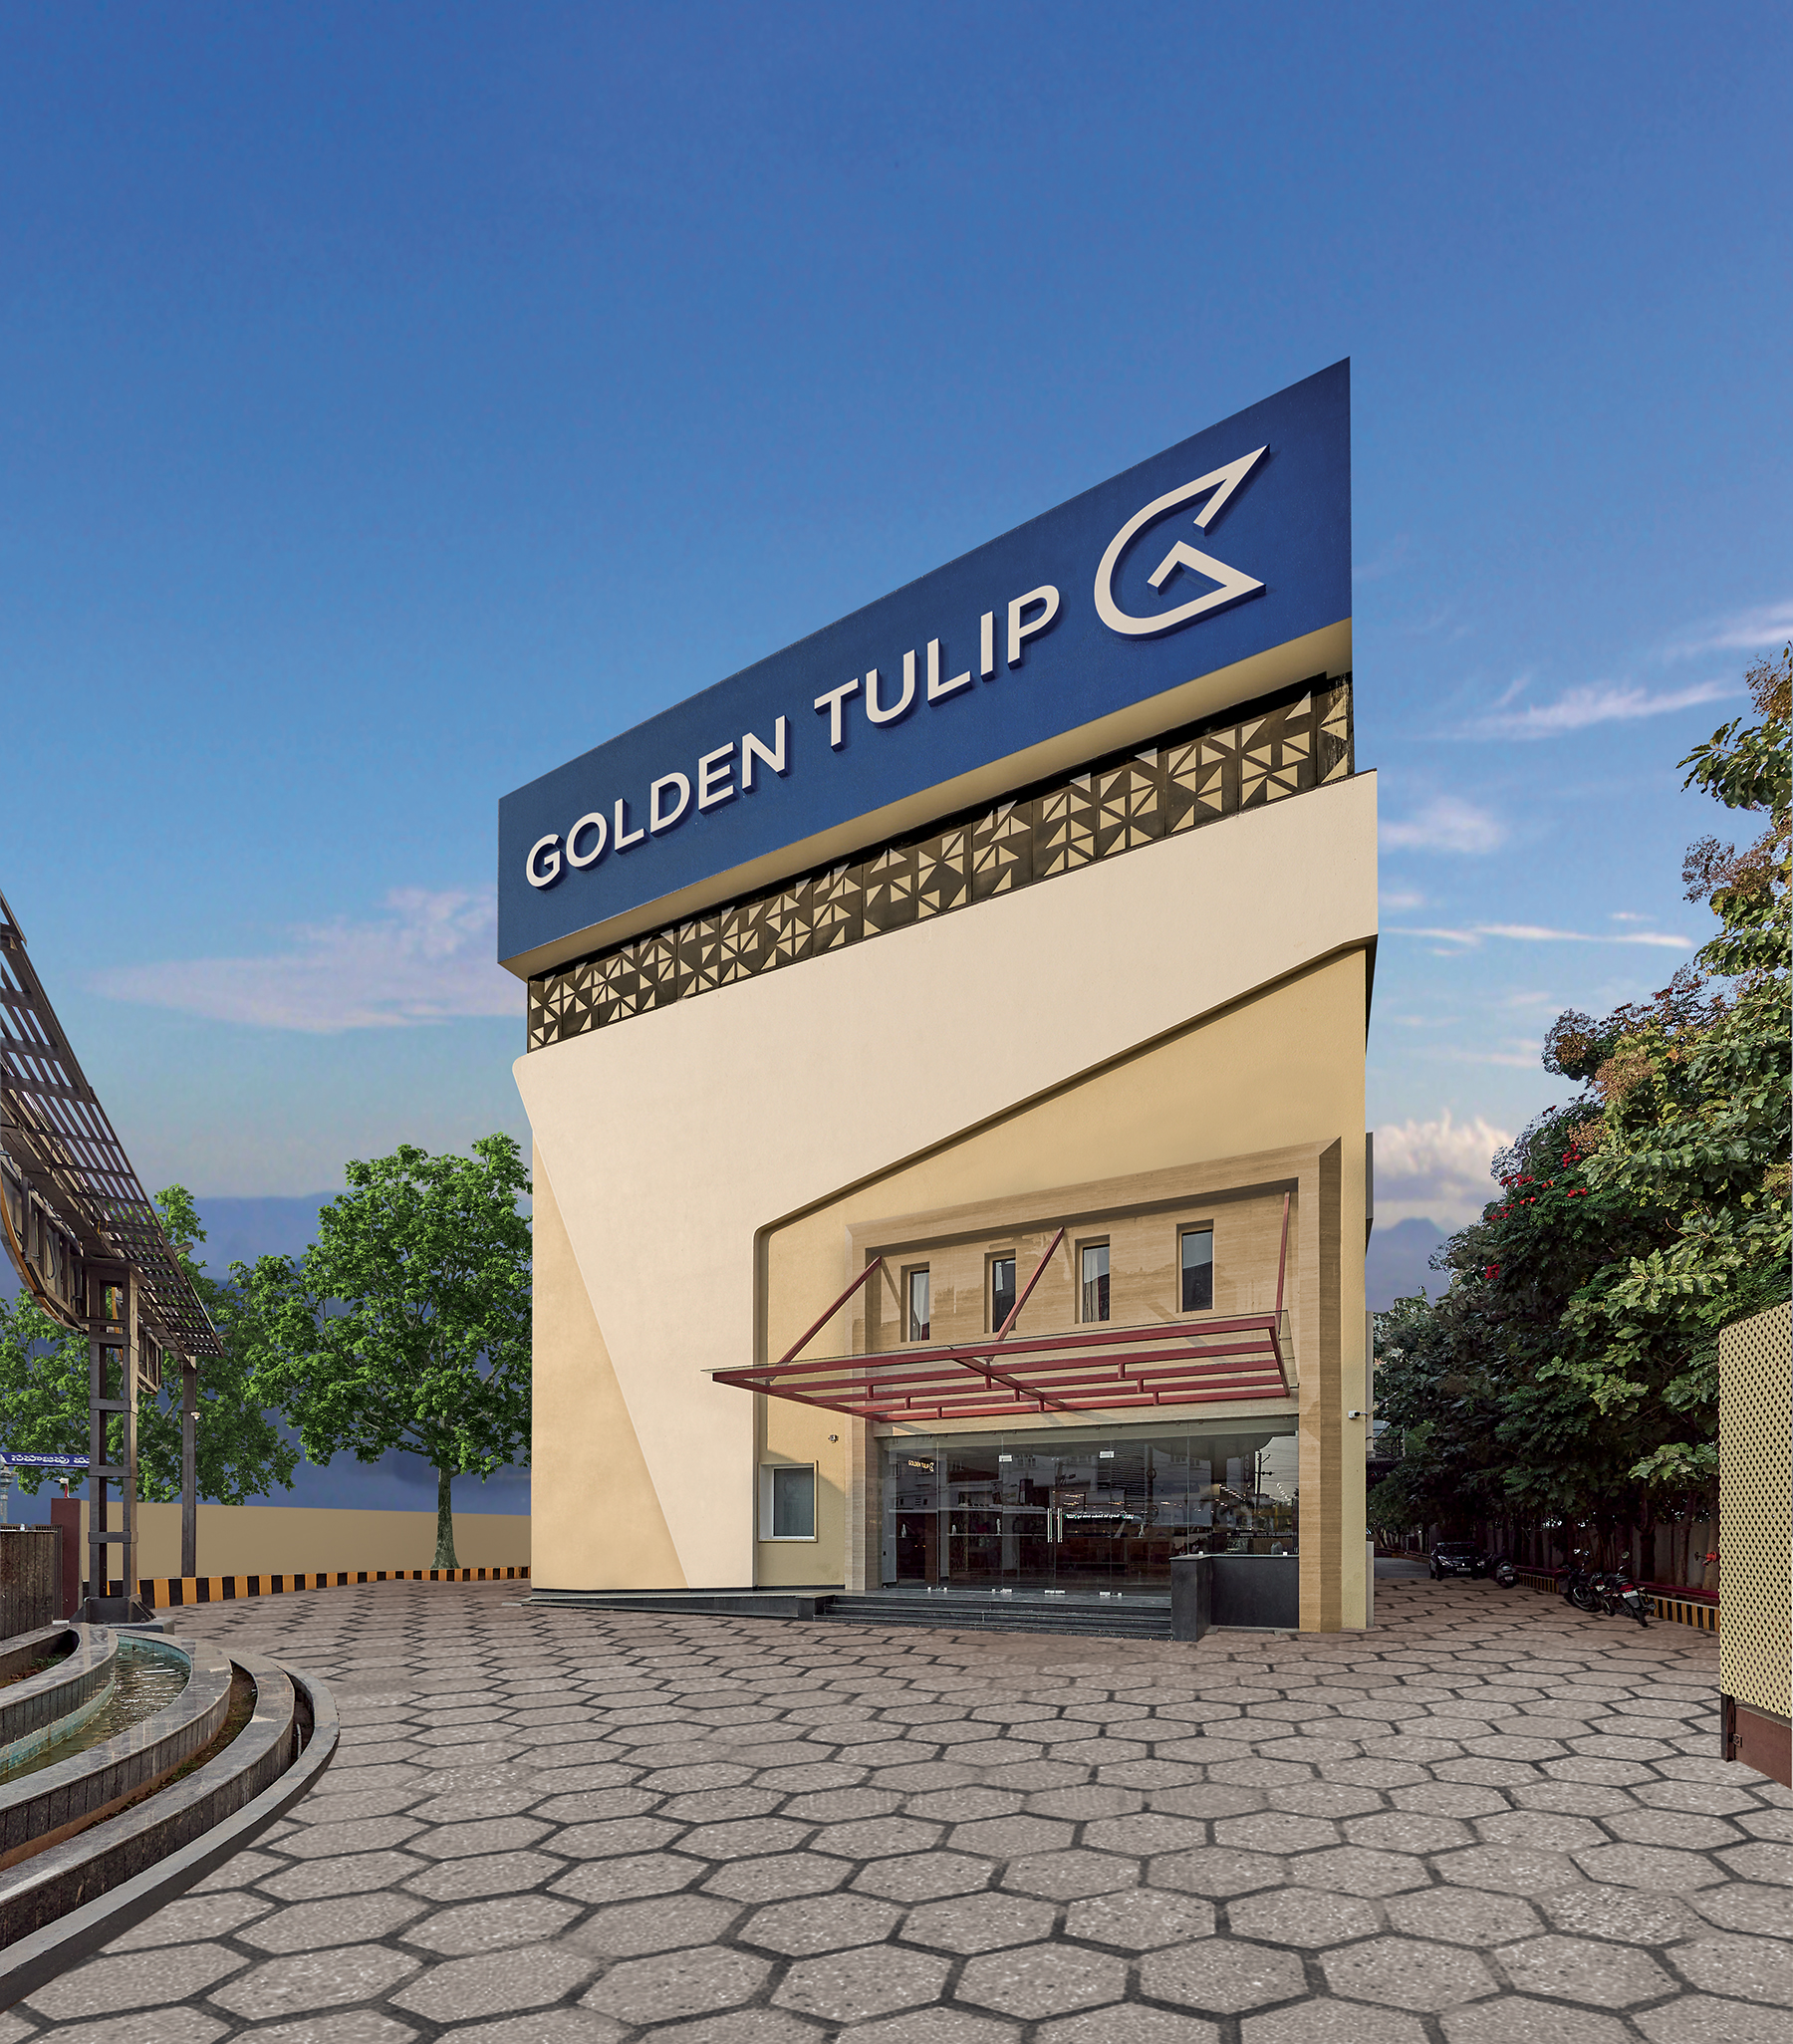 Sarovar Hotels & Resorts announces the opening of internationally acclaimed Golden Tulip brand in Tirupati